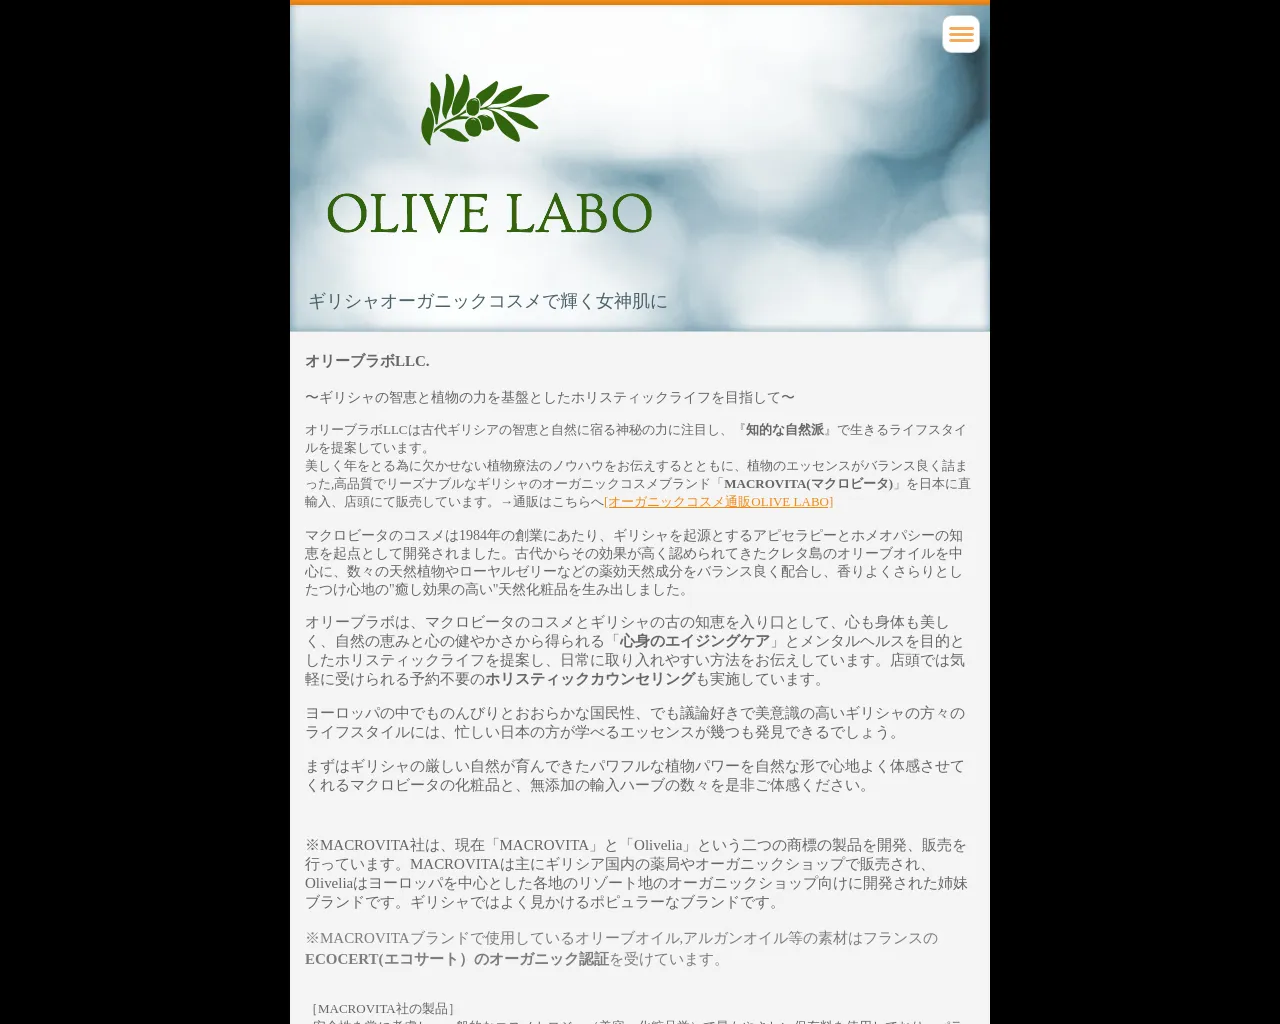 OLIVE LABO site